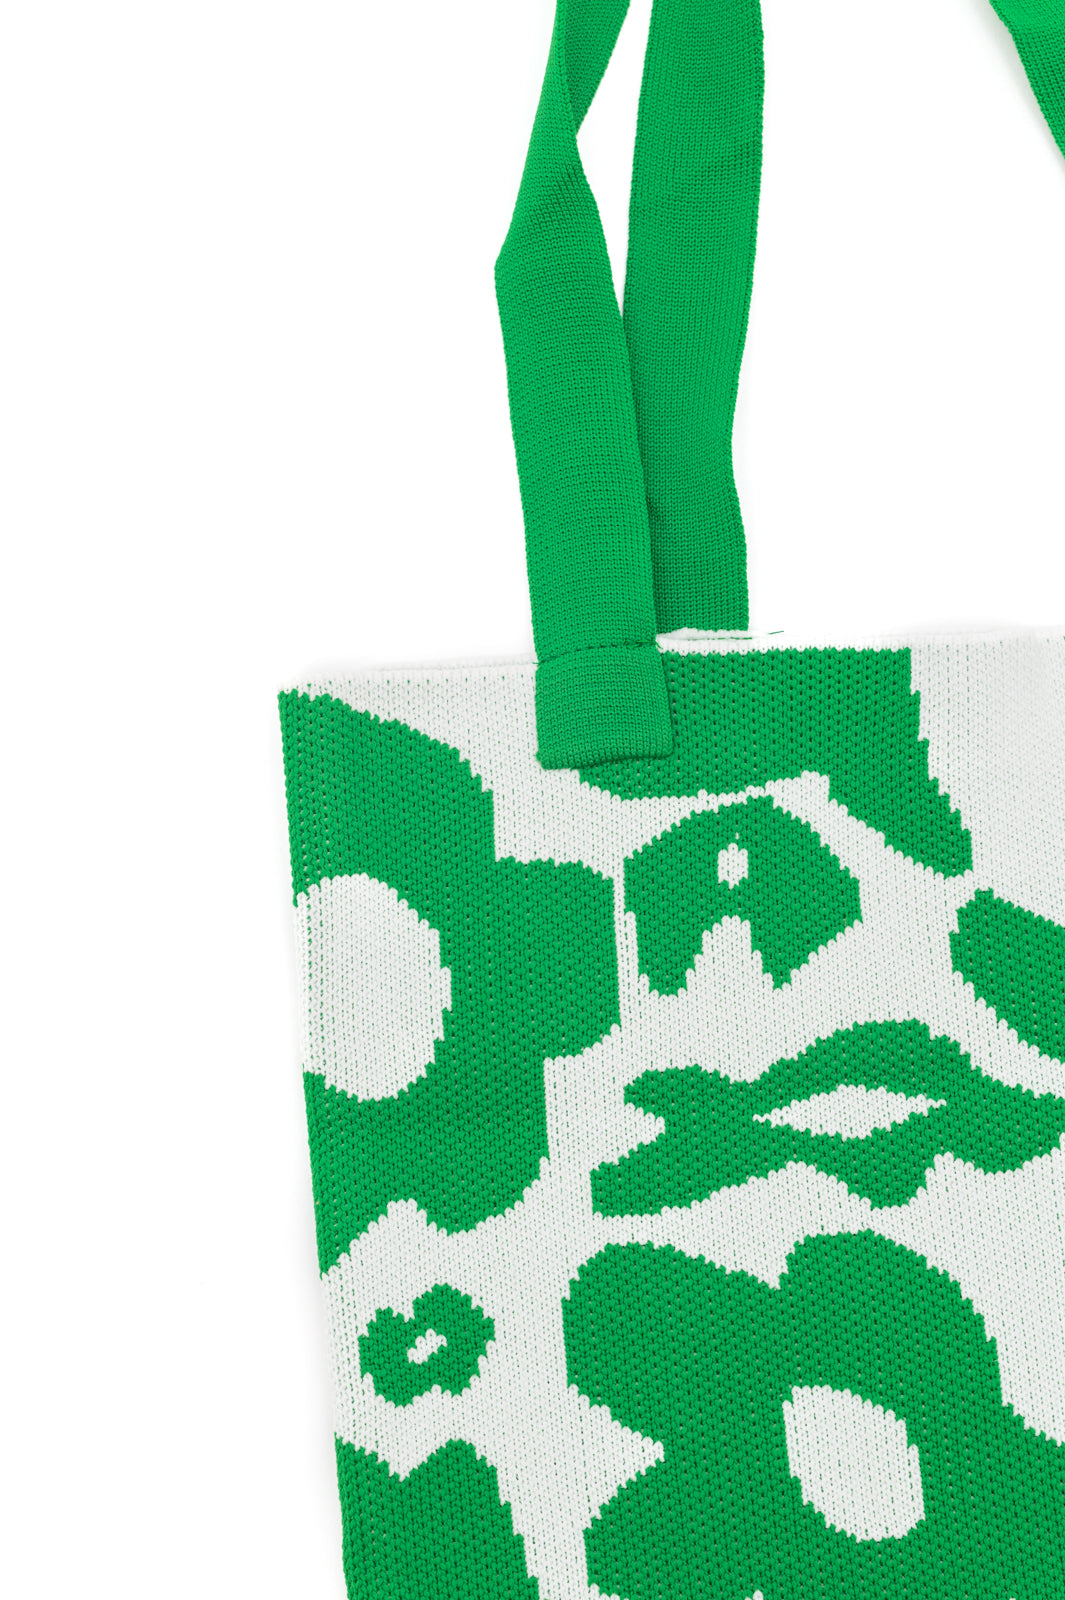 Lazy Daisy Knit Bag in Green